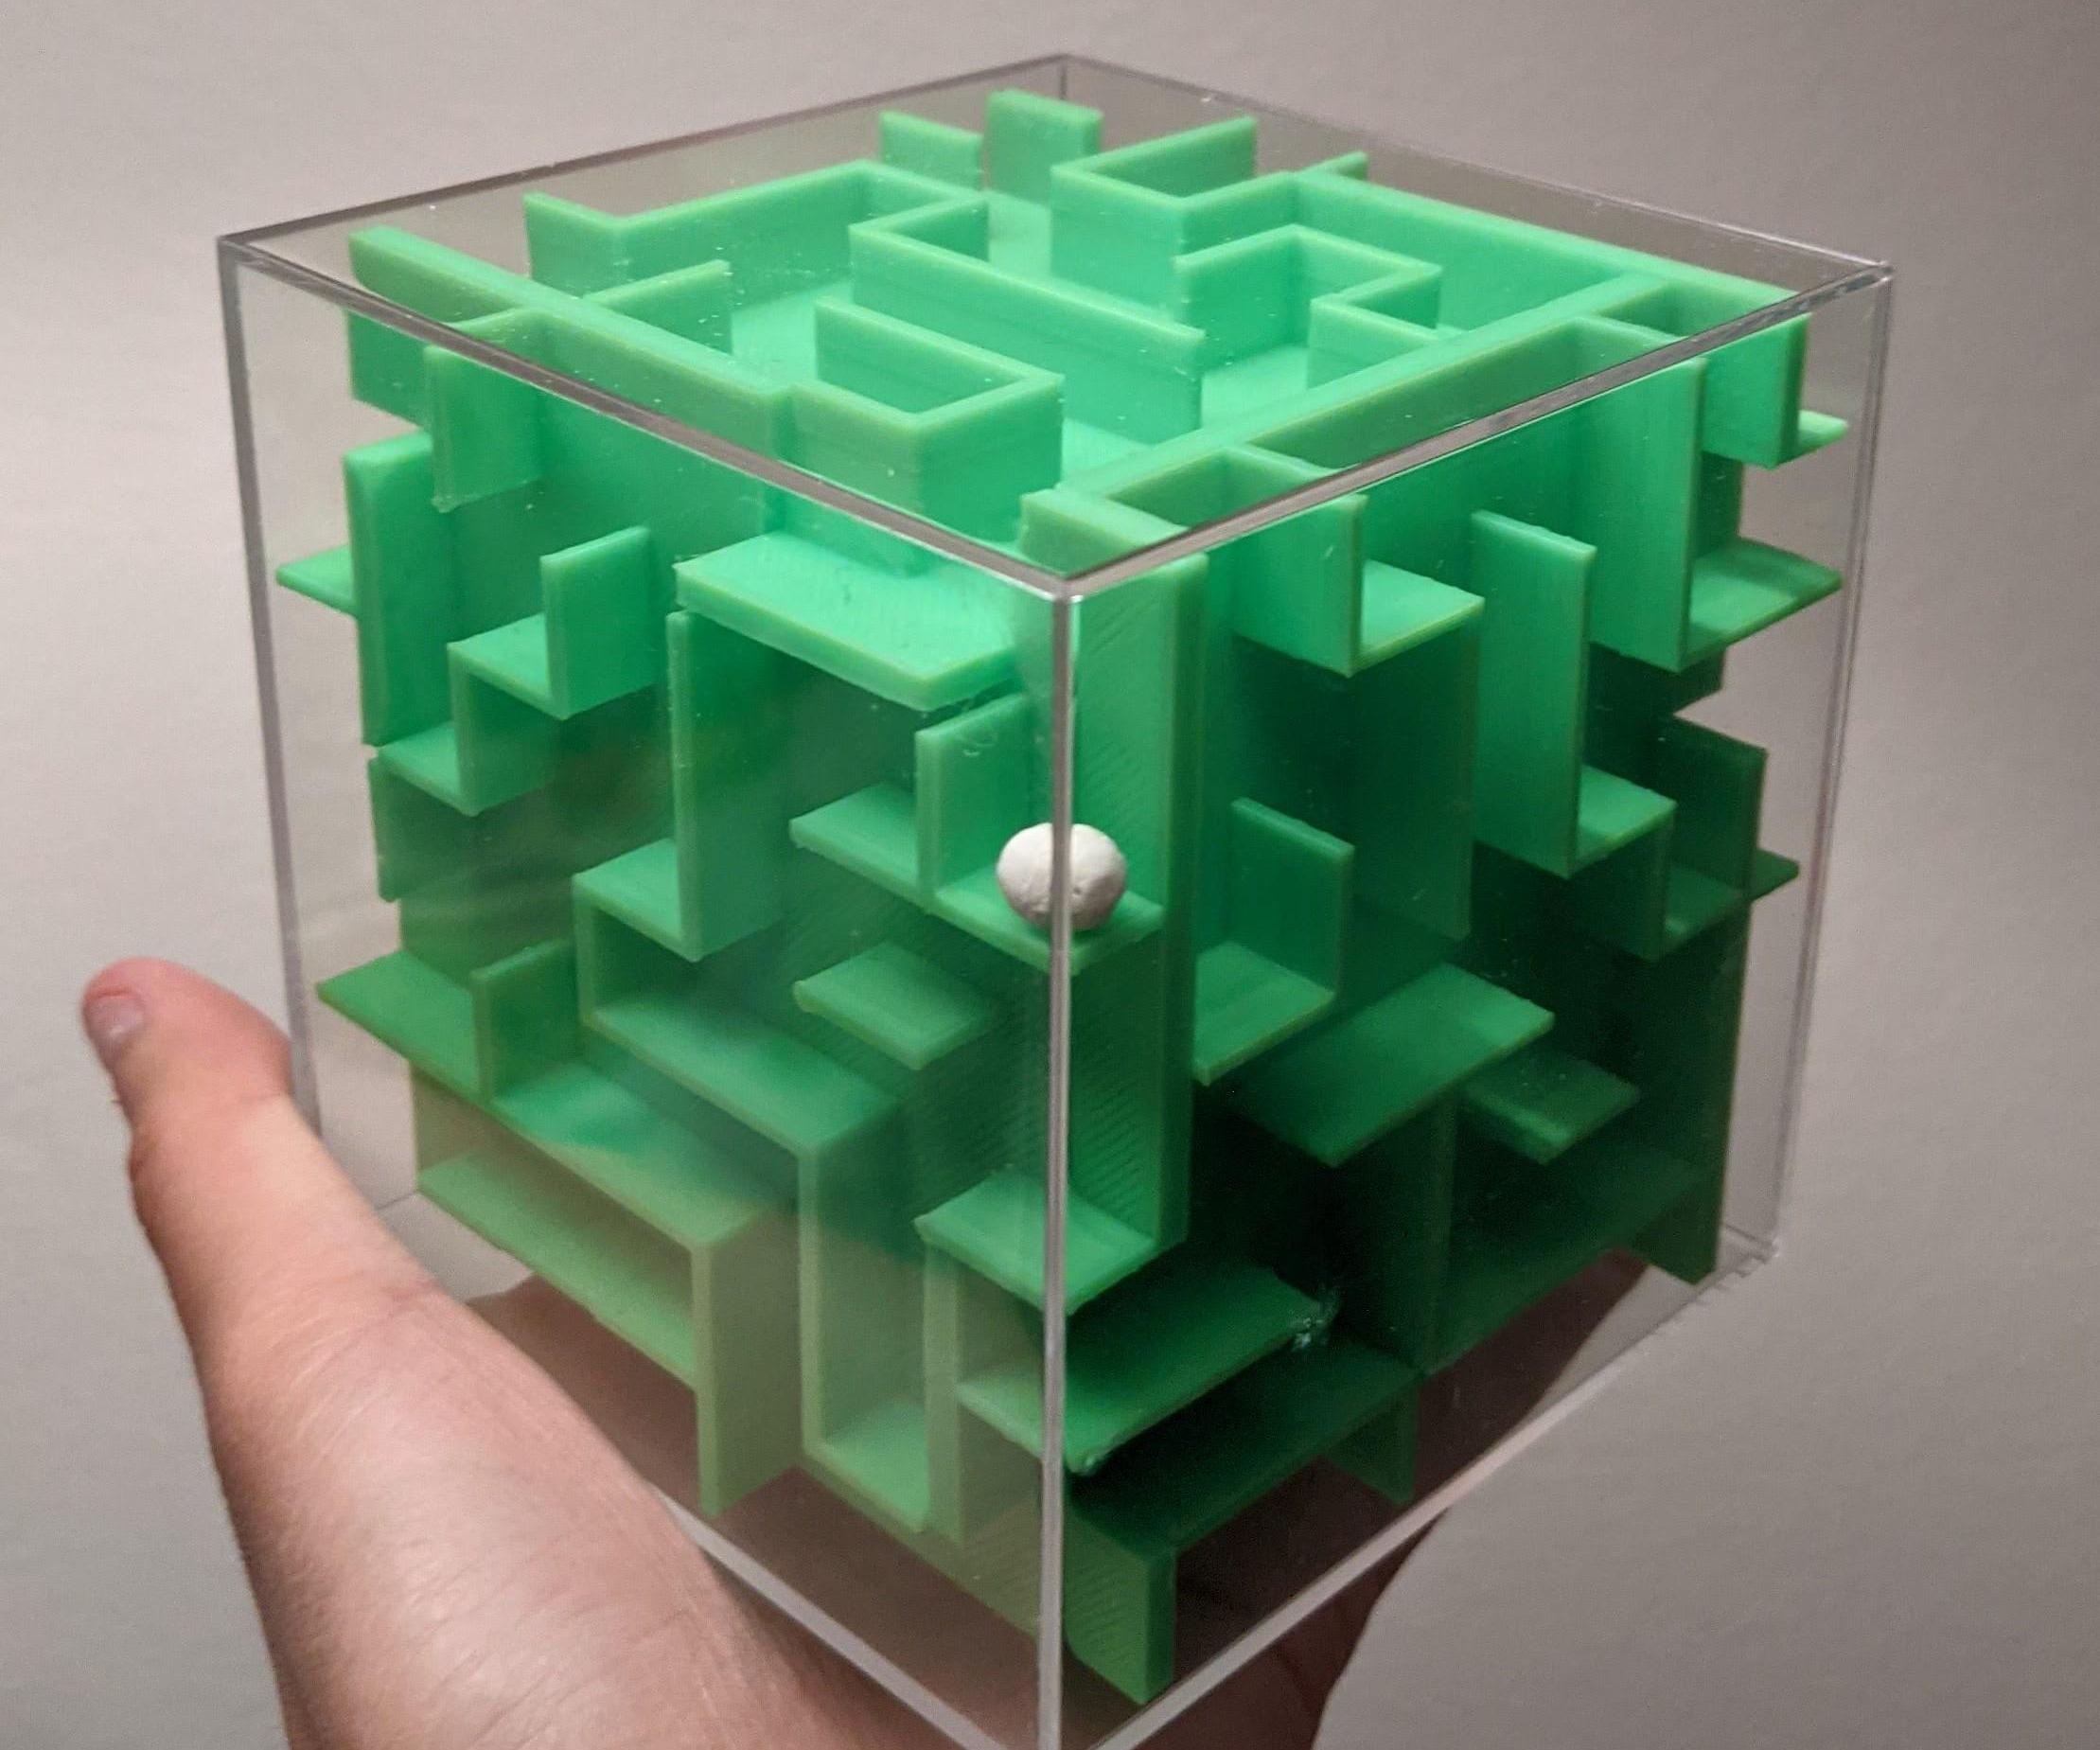 3D Printed Maze Cube